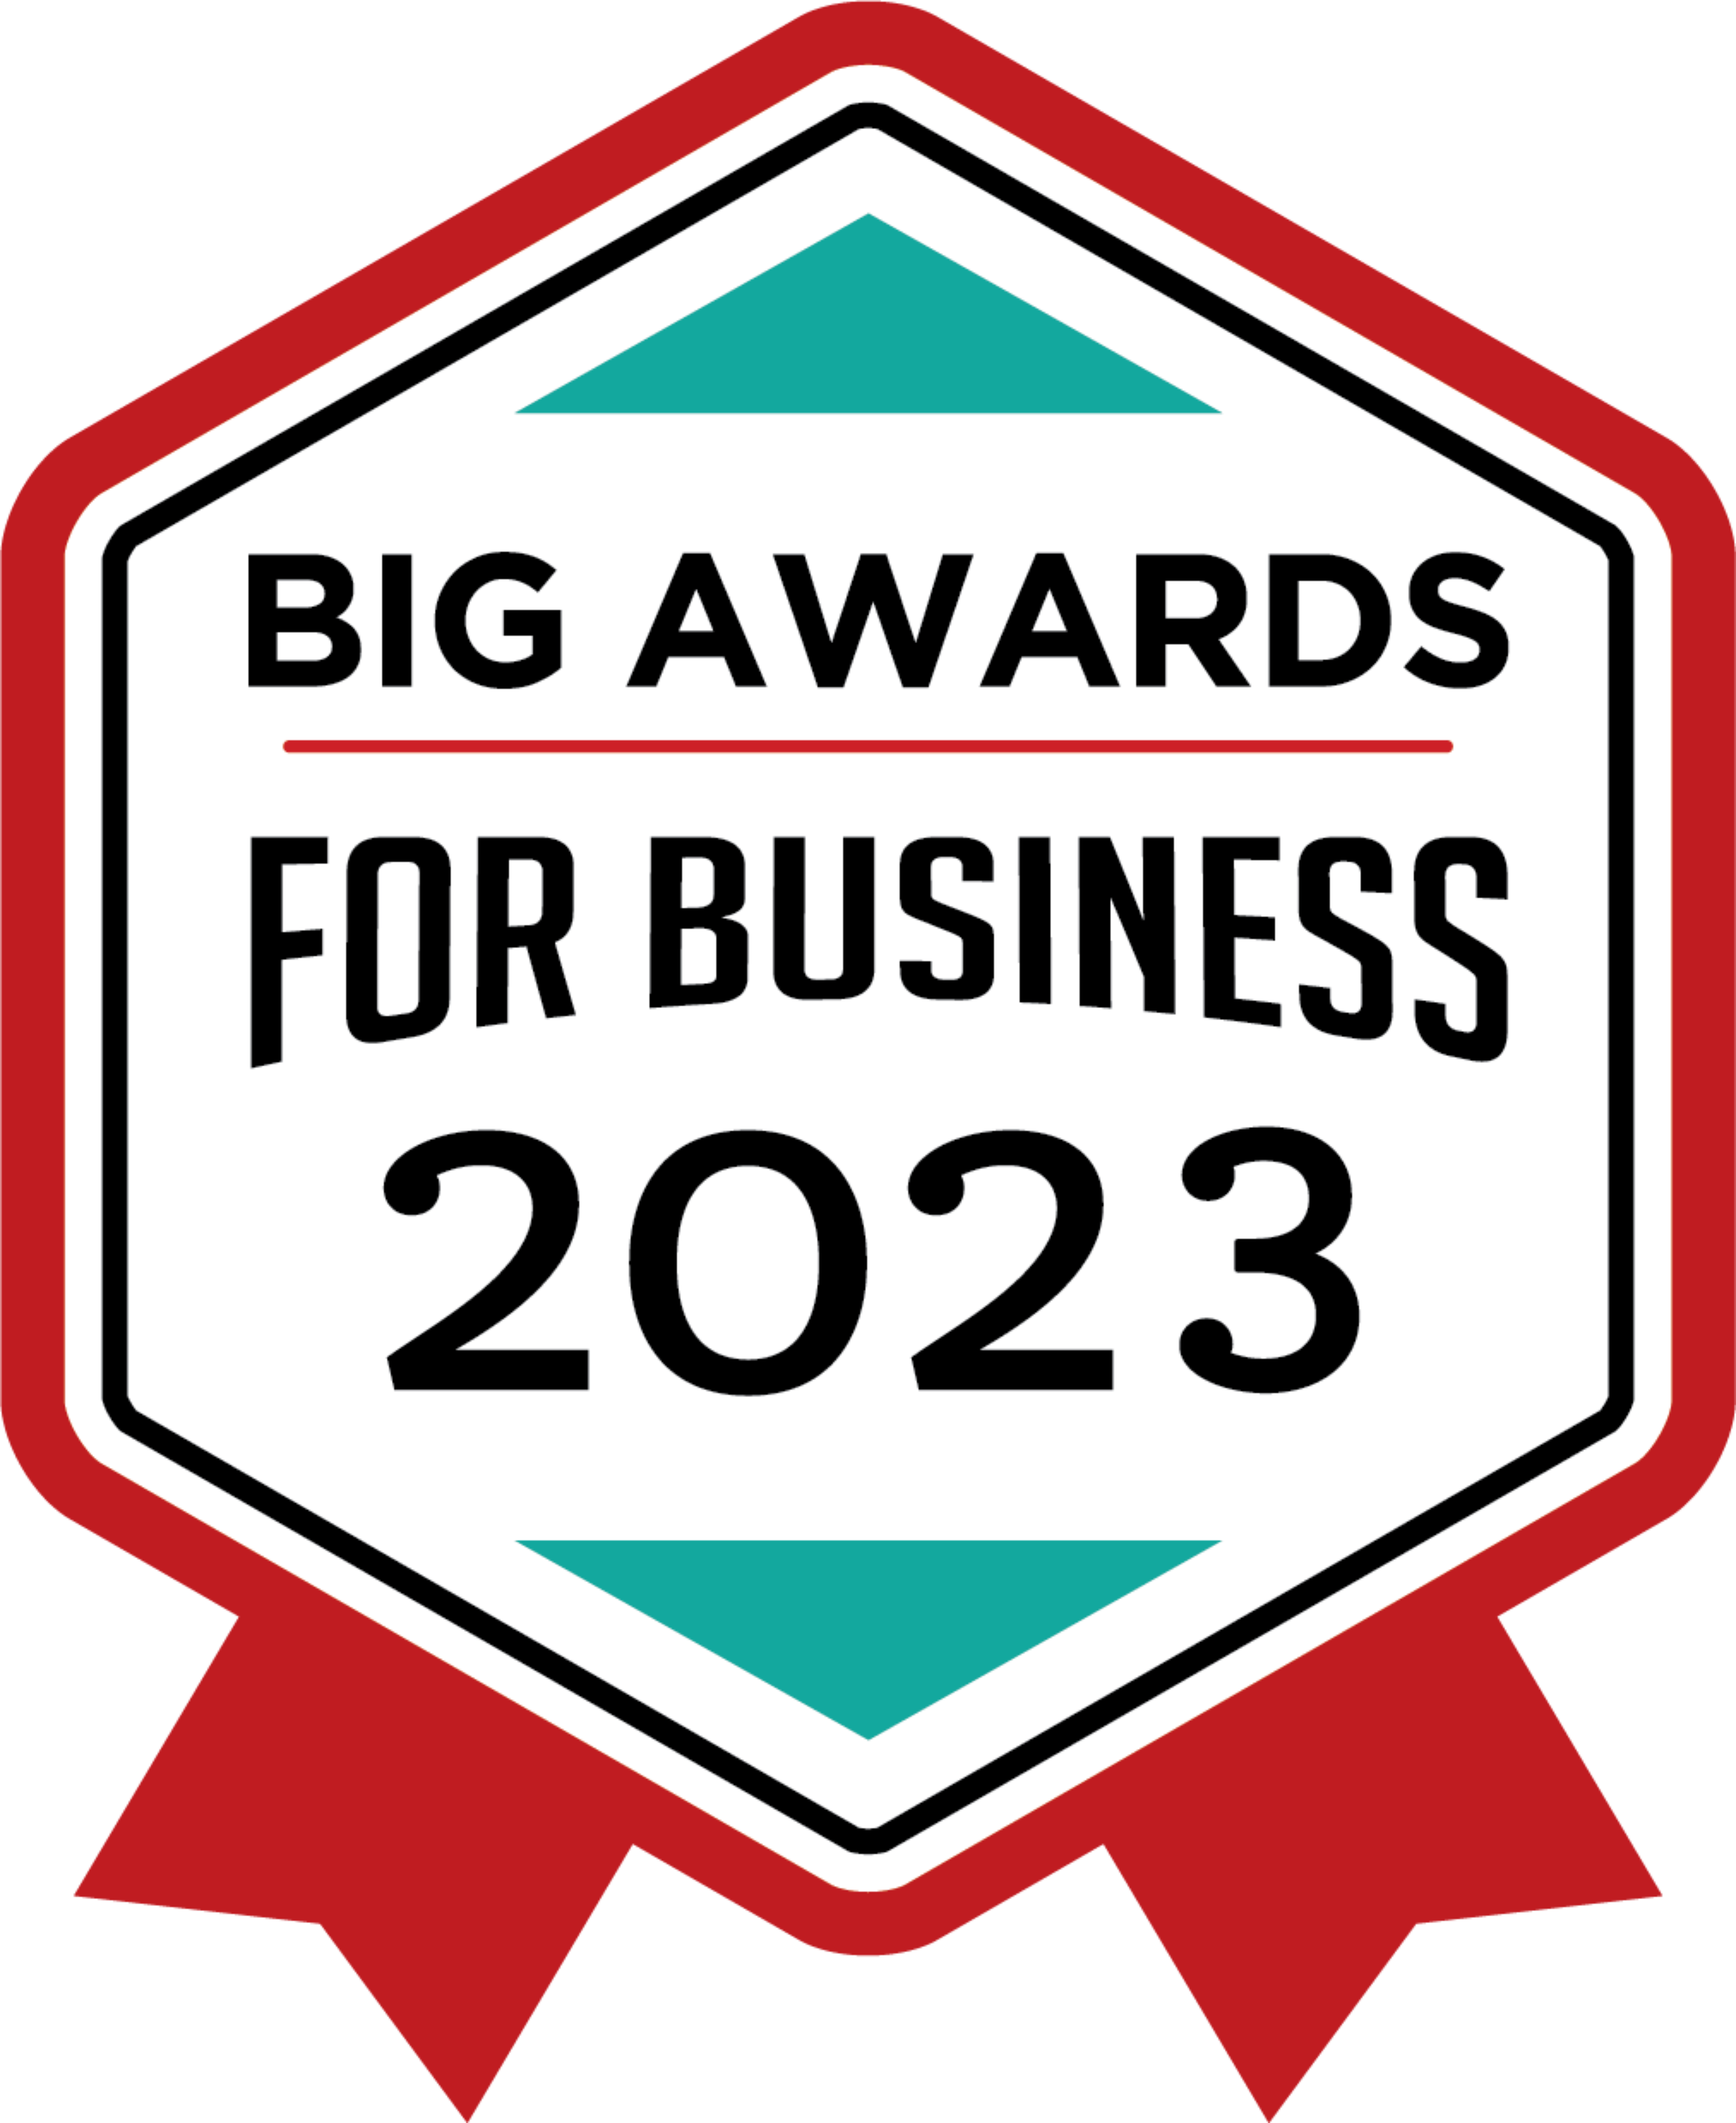 Big Award for Business 2023